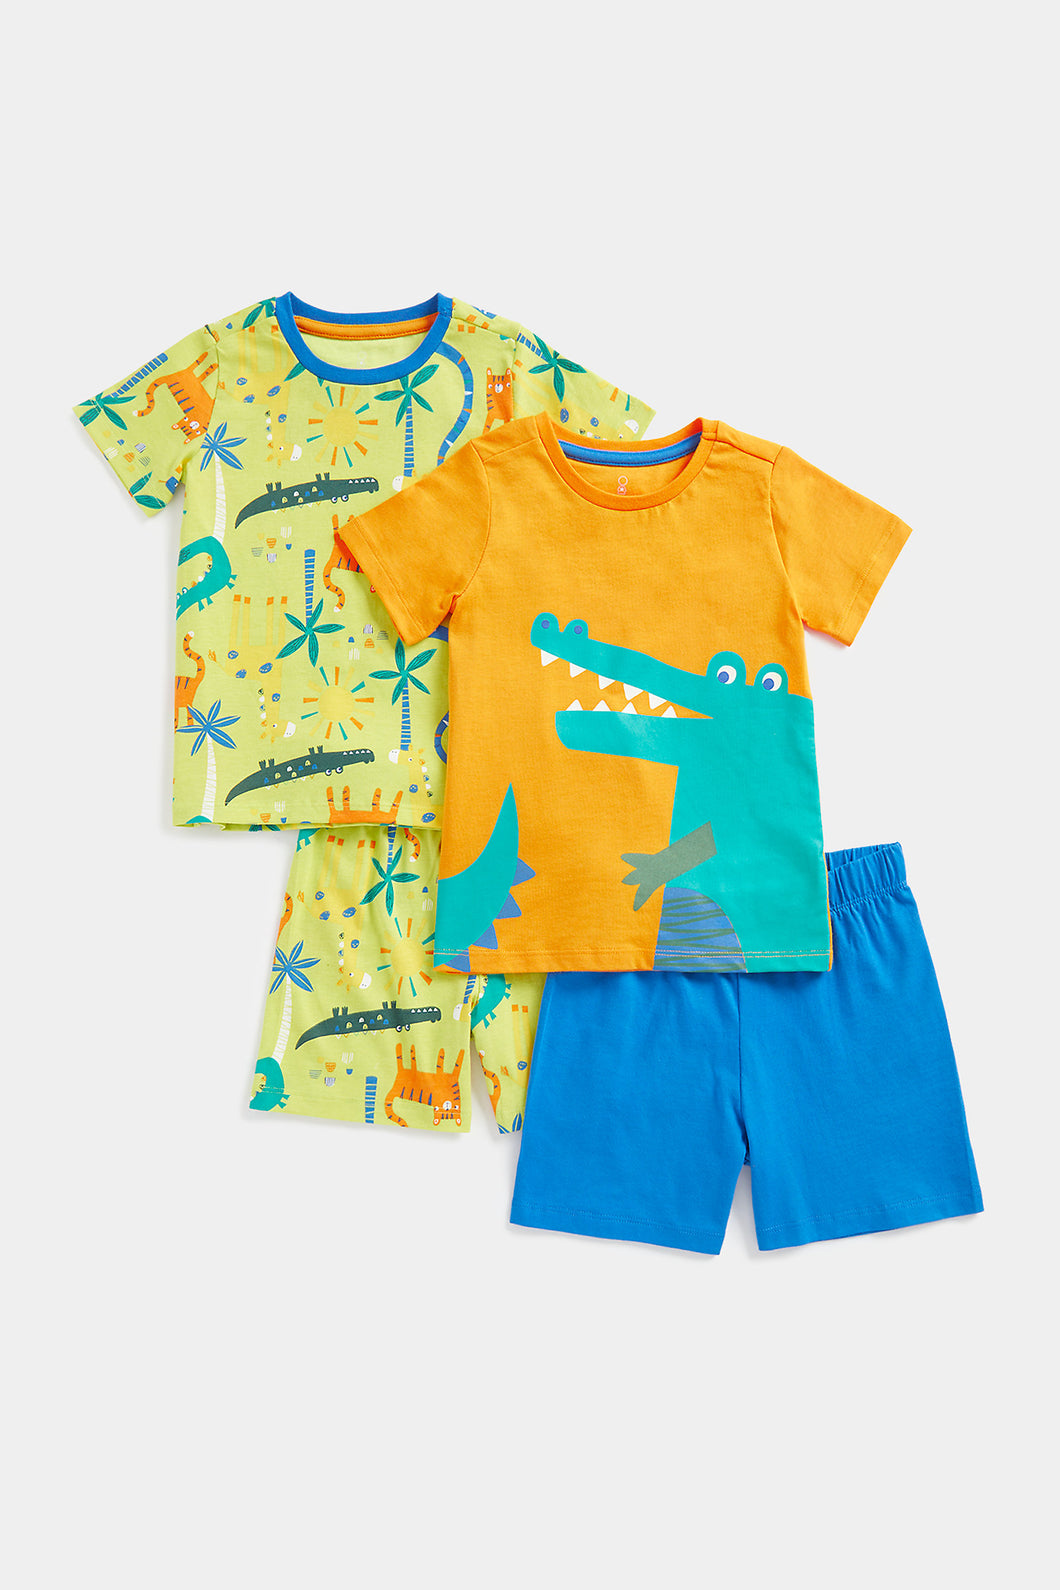 Mothercare Crocodile Shortie Pyjamas - 2 Pack